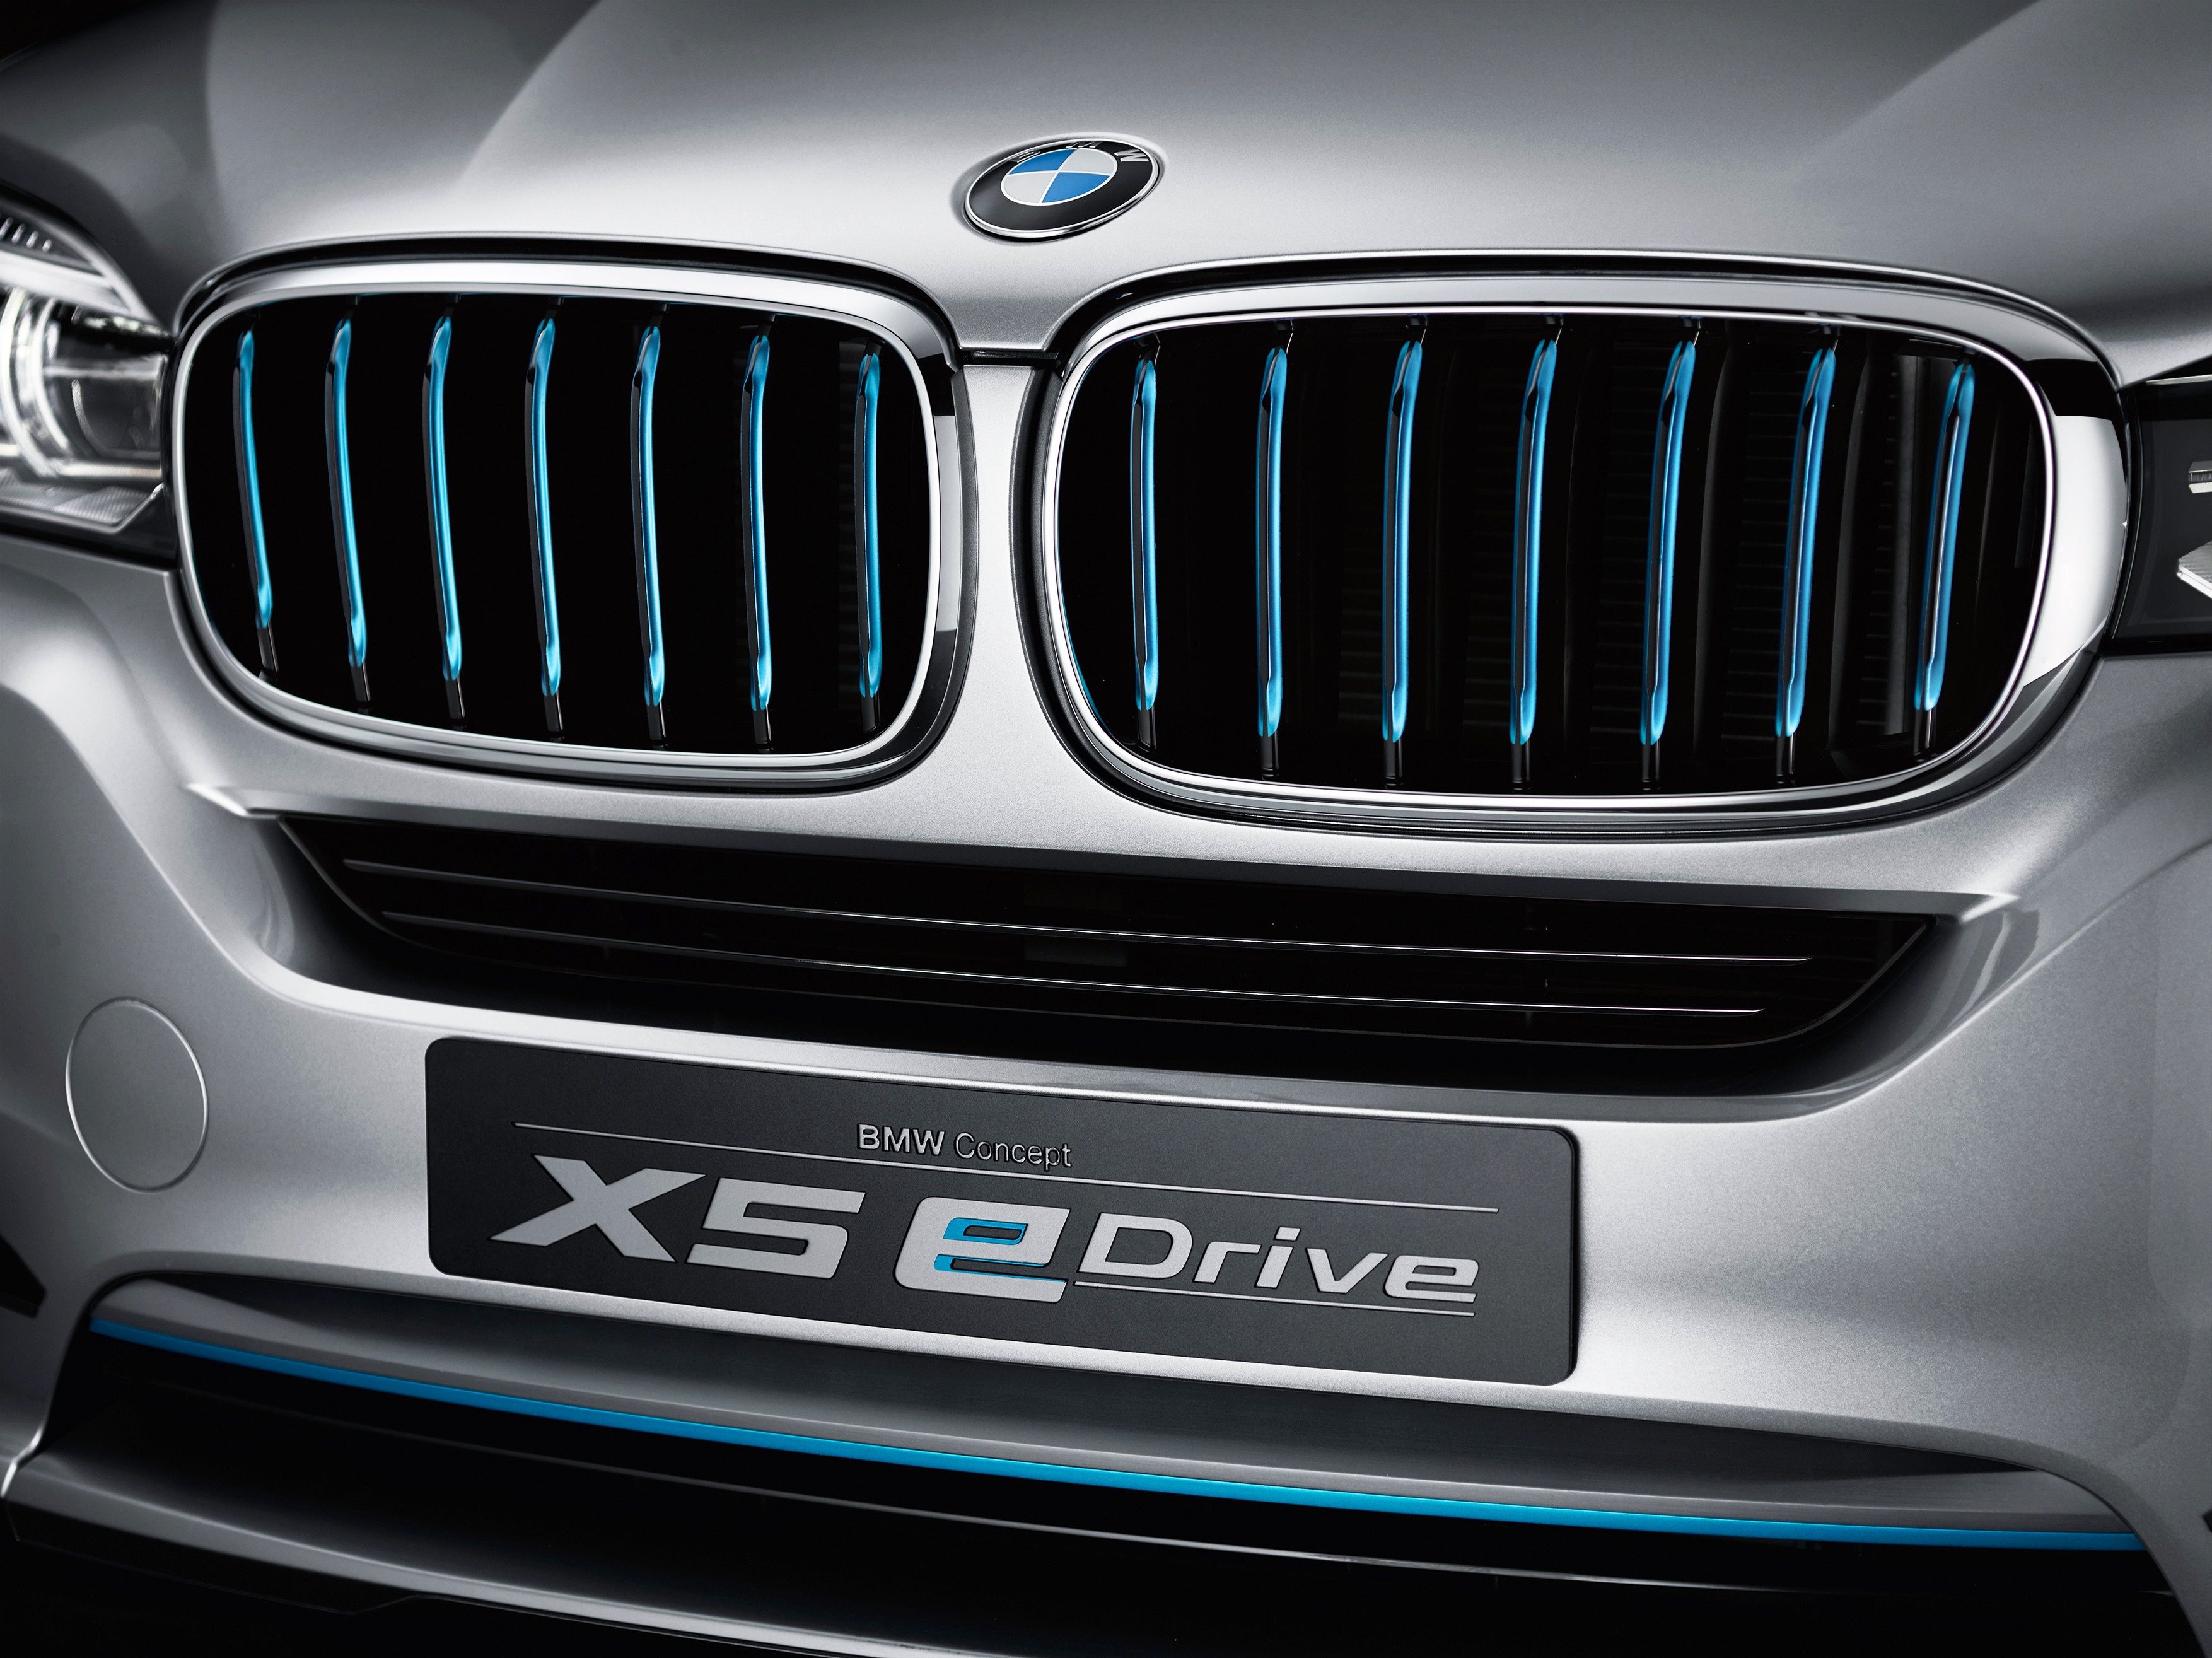 2013 BMW X5 eDrive Concept